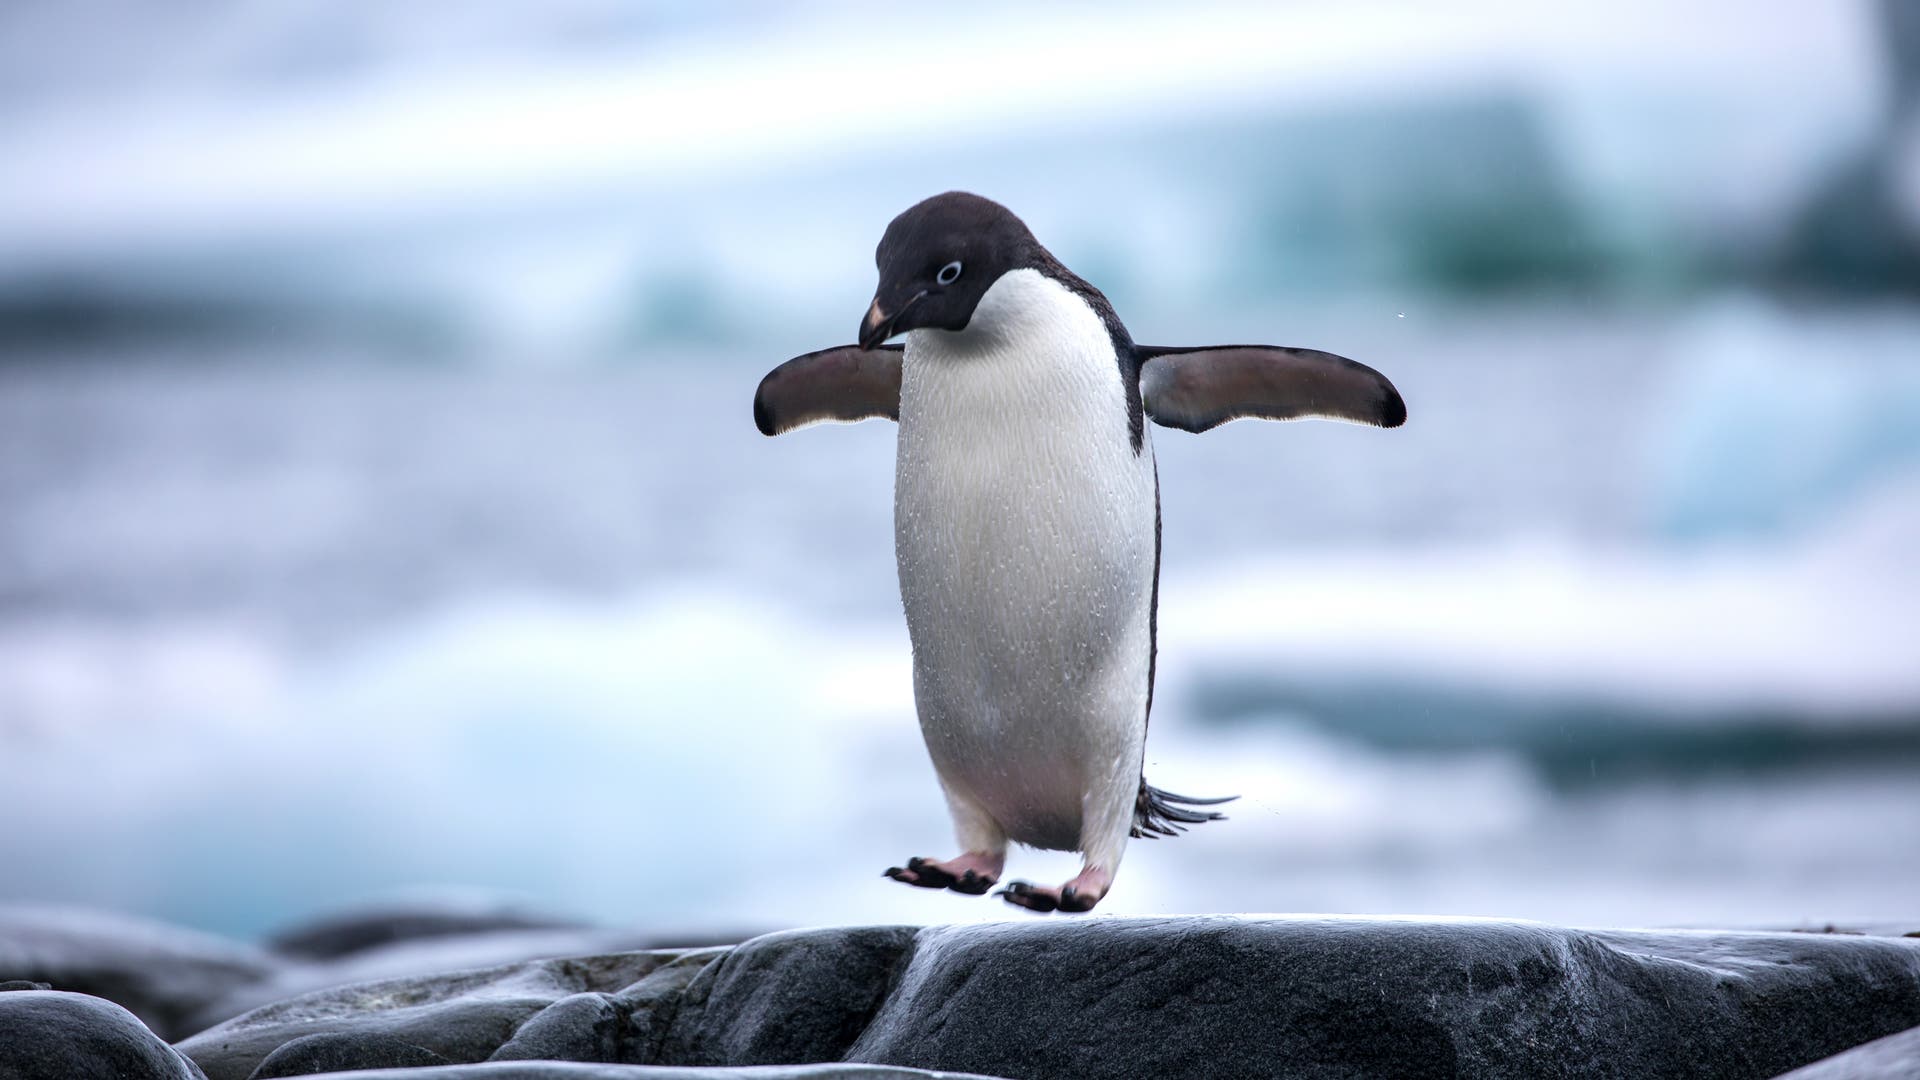 Penguins originated on a sunken continent